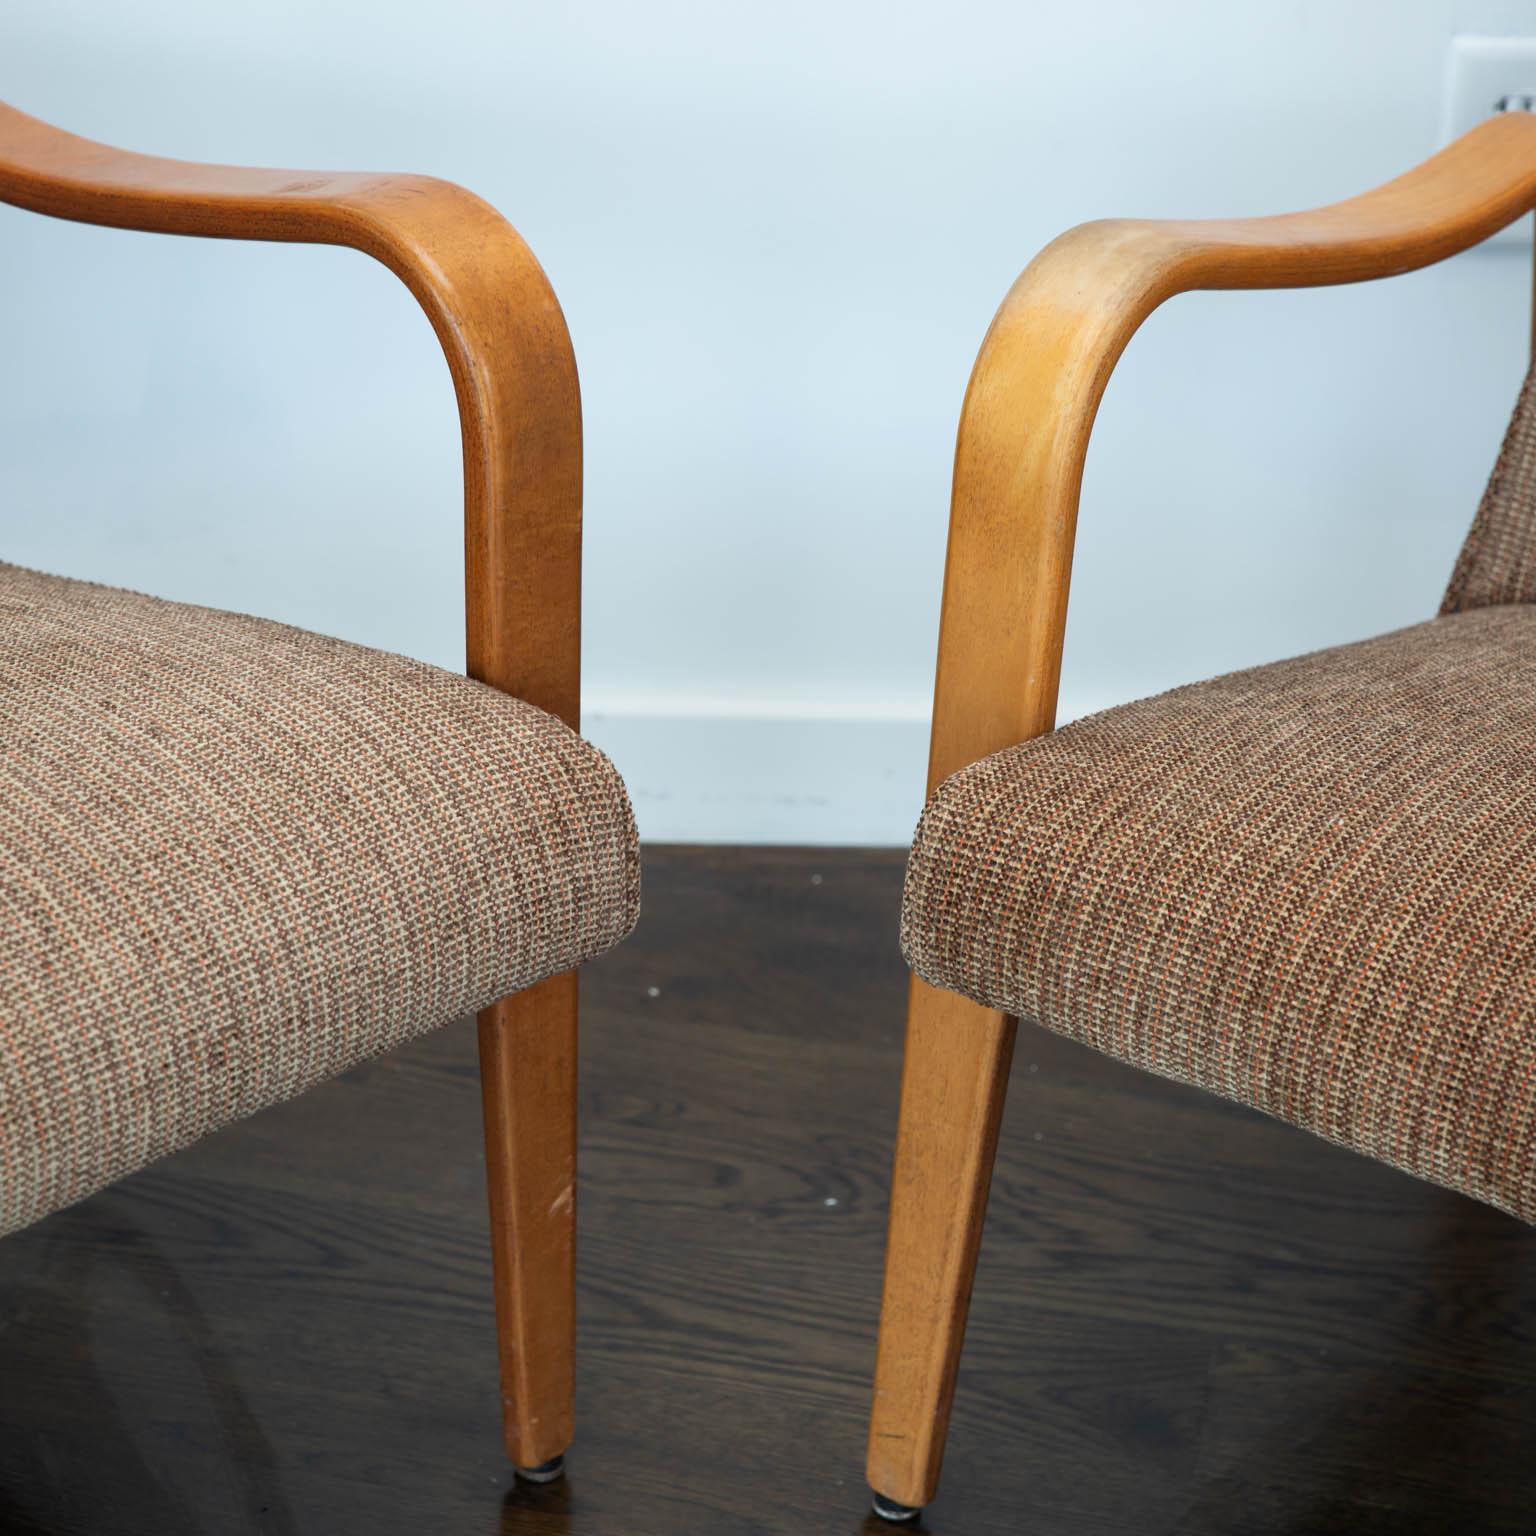 Mid-Century Modern Pair of Thonet Bentwood Armchairs